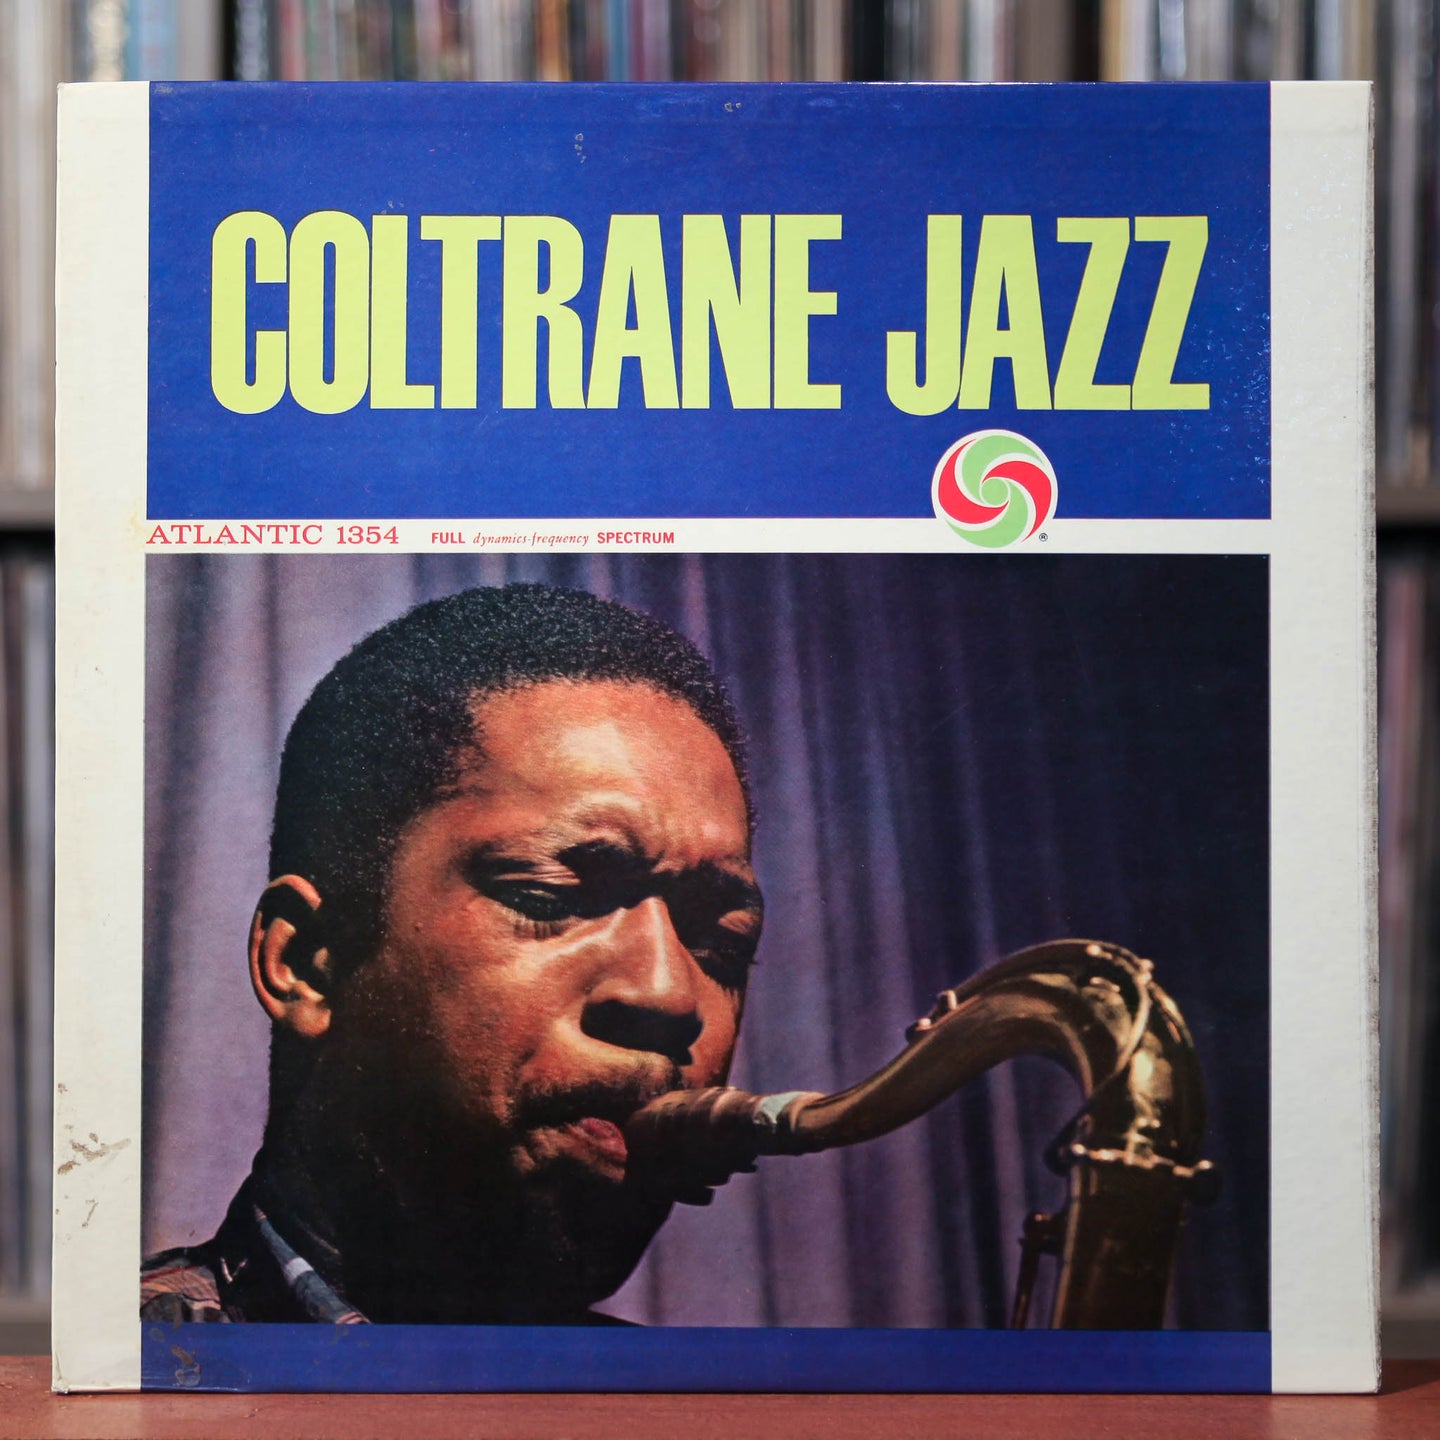 John Coltrane - Coltrane Jazz - 1961 Atlantic